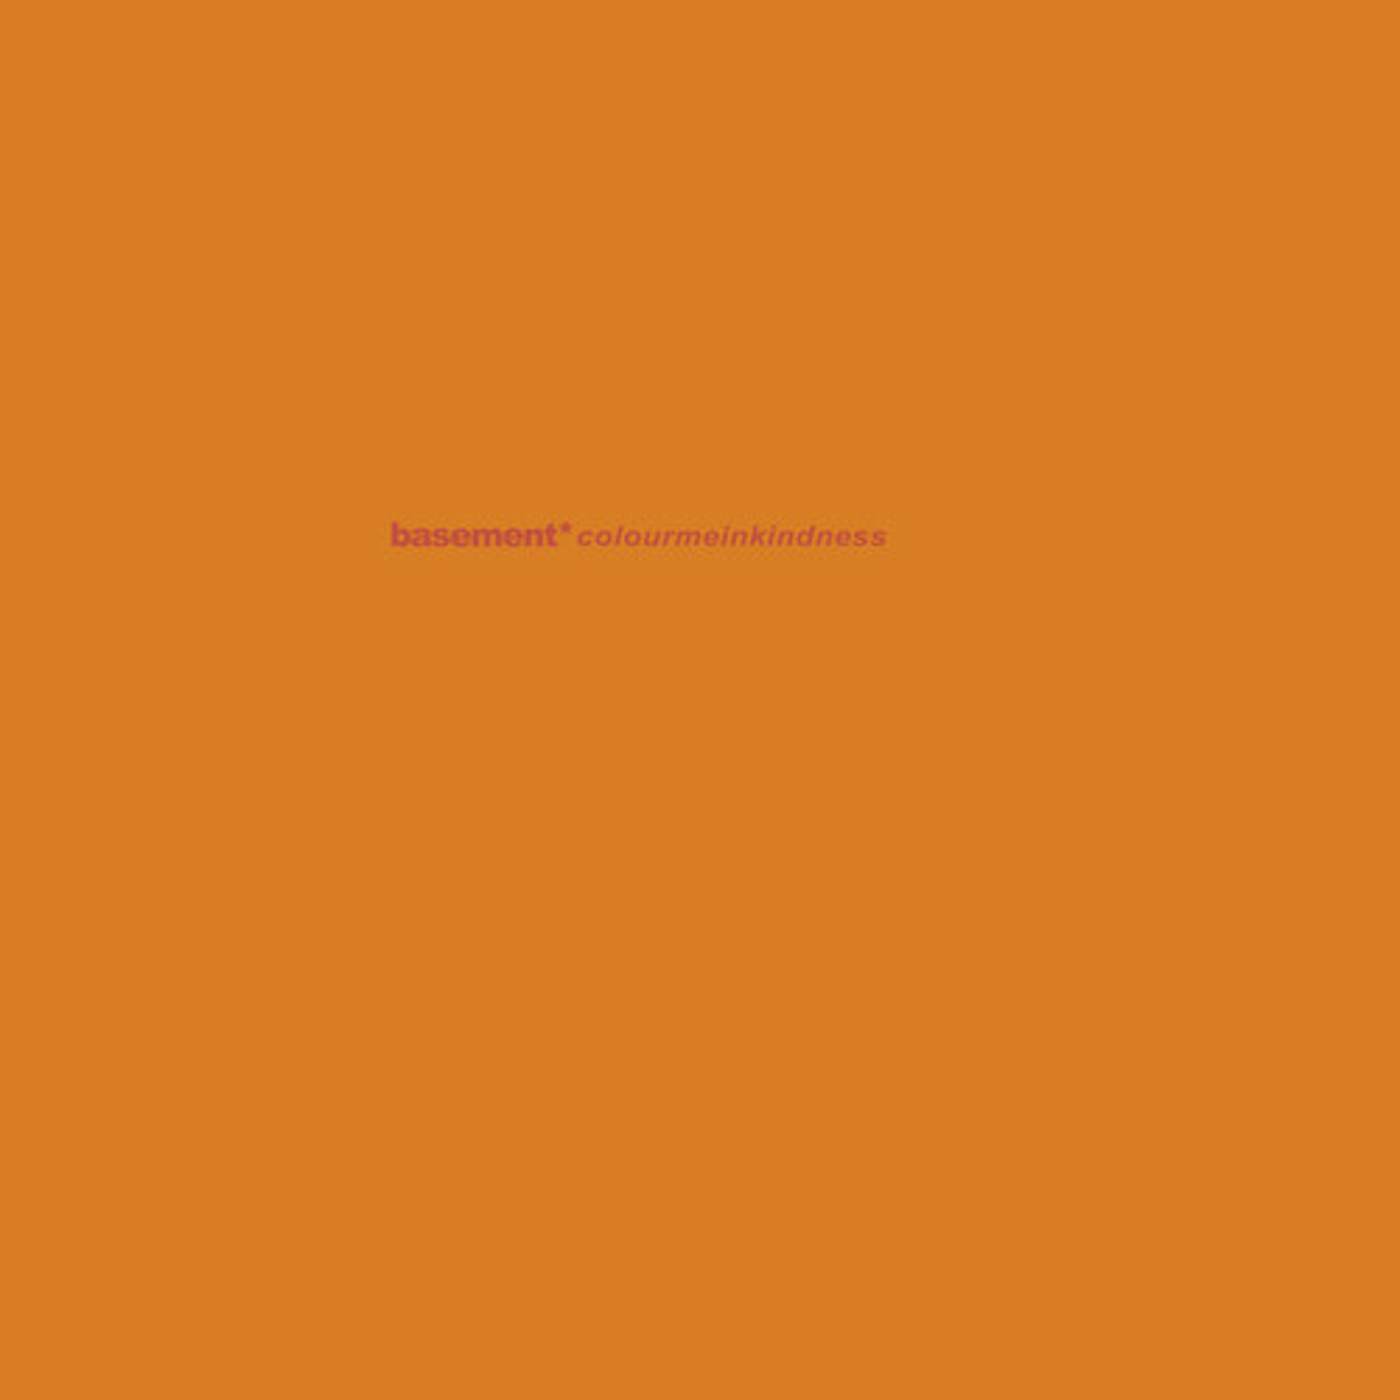 Basement Colourmeinkindness (Deluxe Anniversary Edition) Vinyl Record